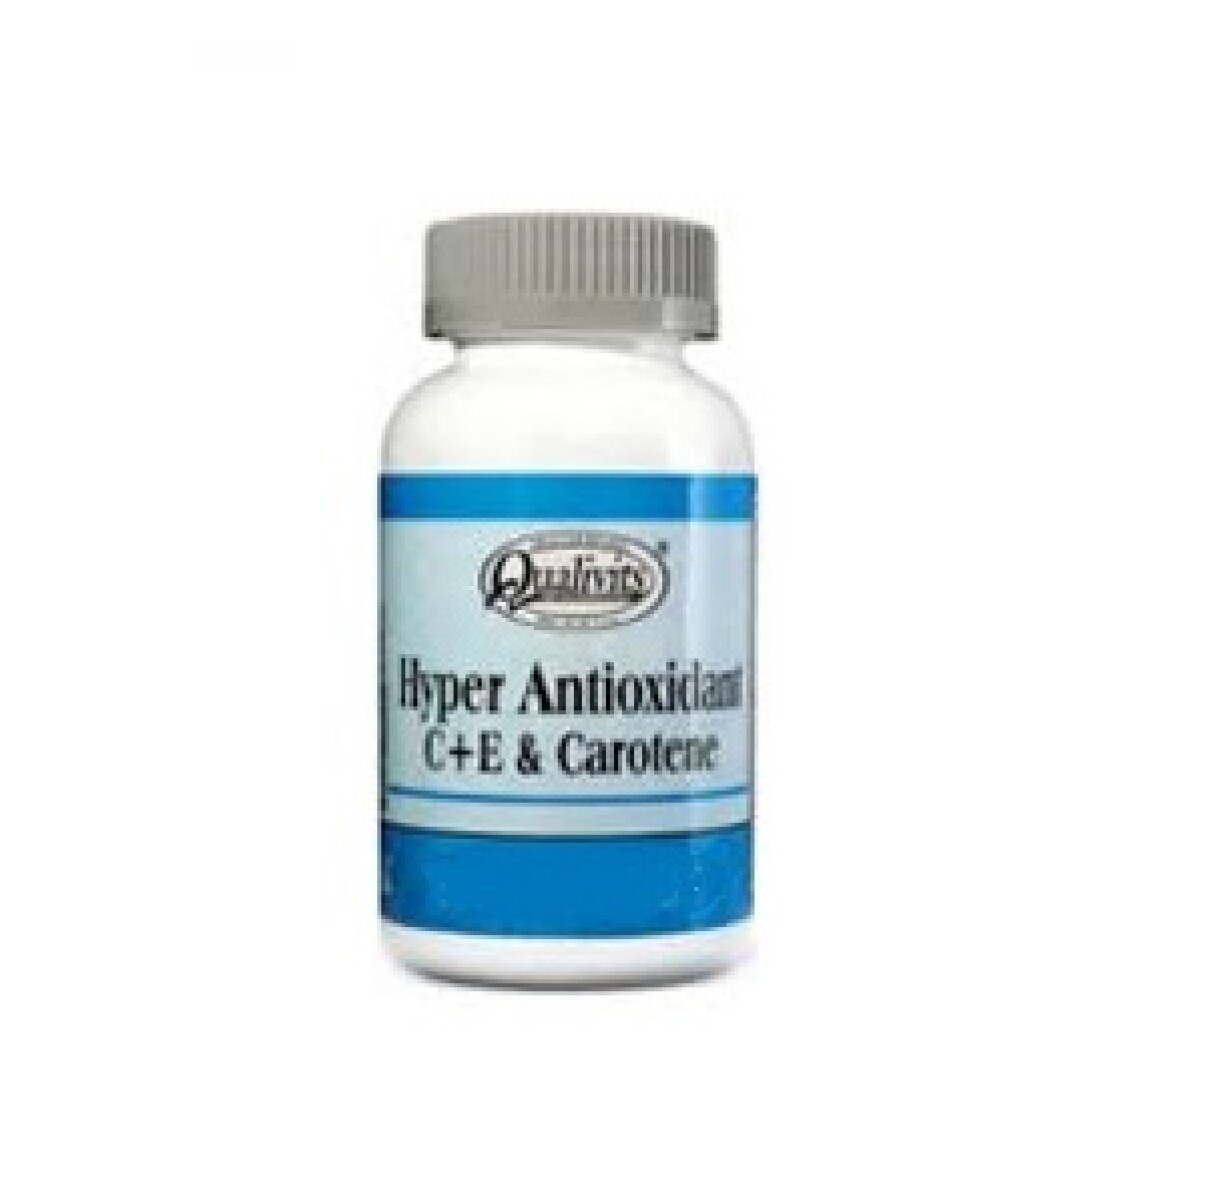 Hyper Antioxidant C+e & Carotene Qualivits 60 Caps. 